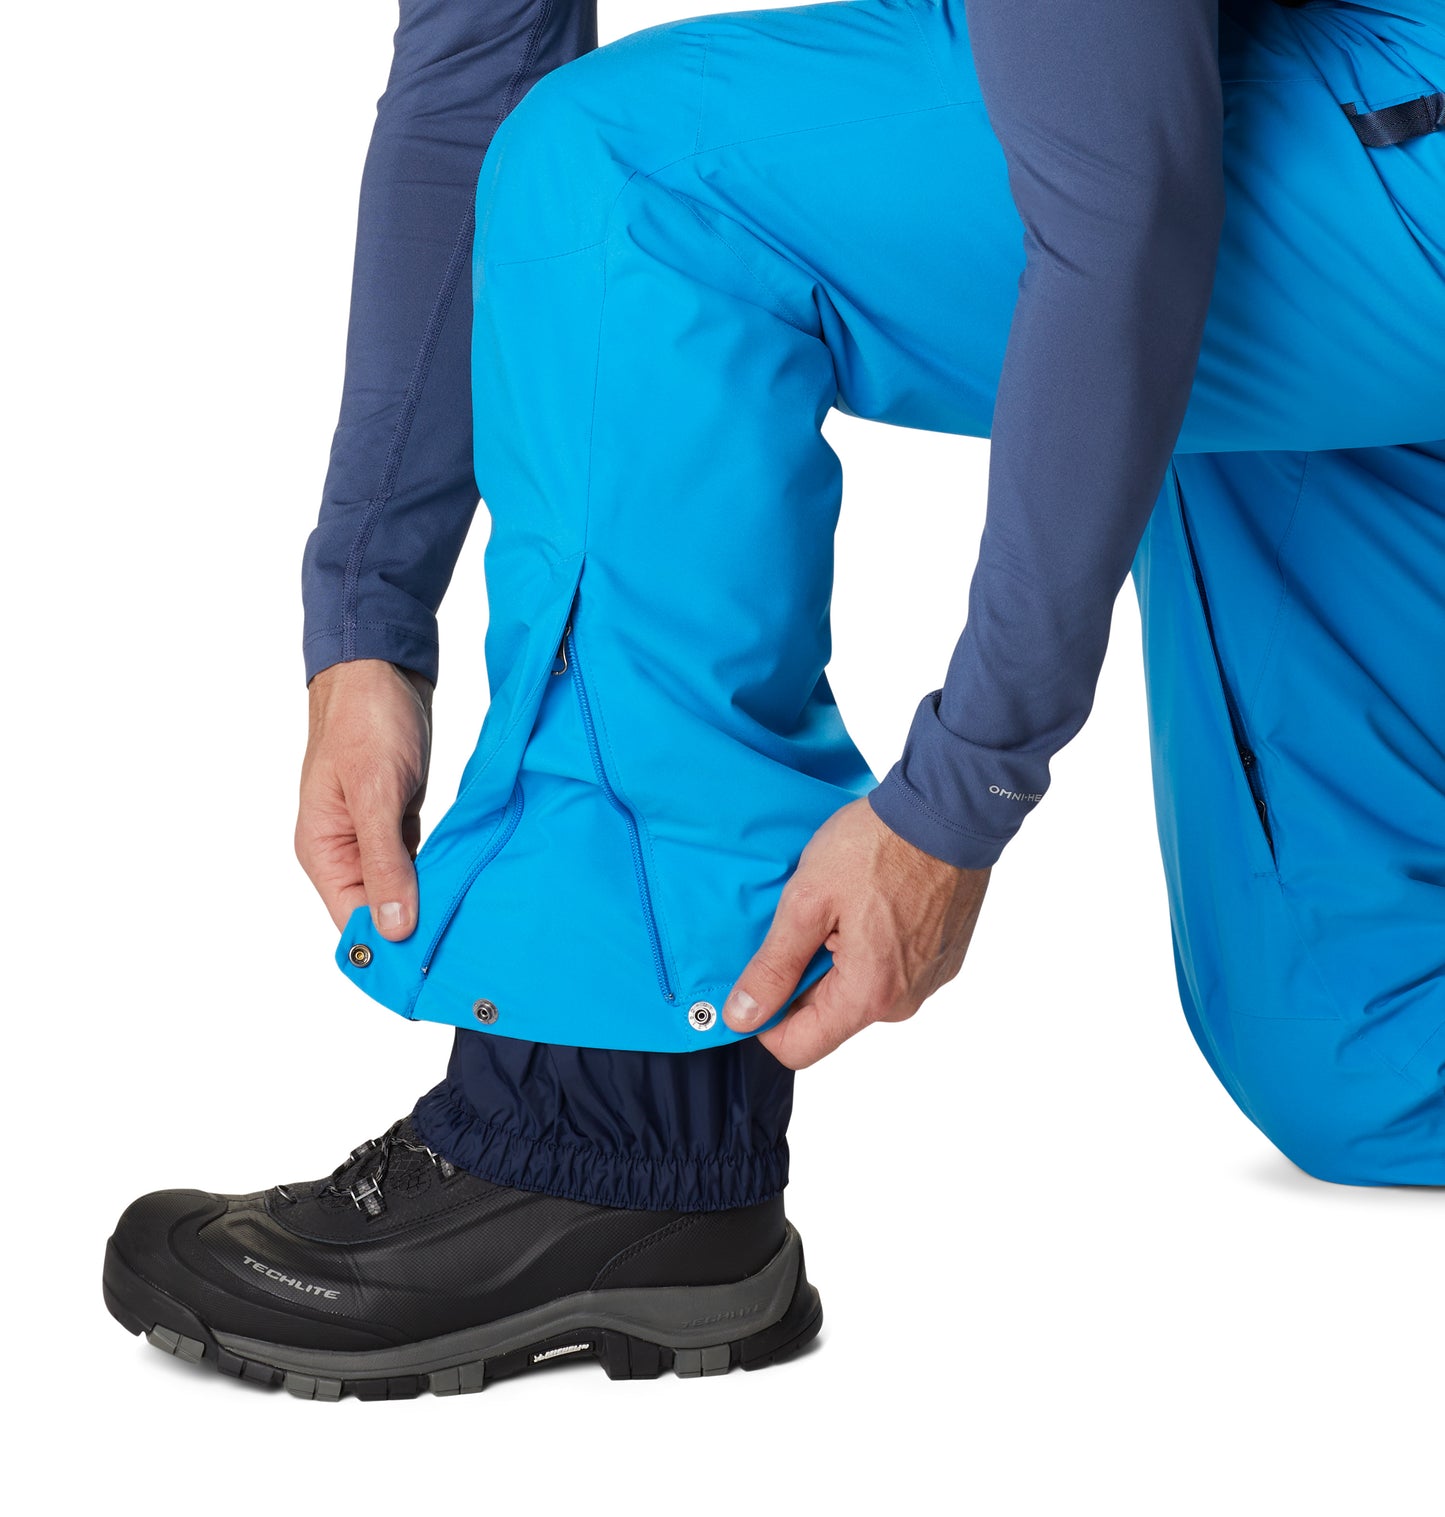 Kick Turn™ II Waterproof Ski Trousers